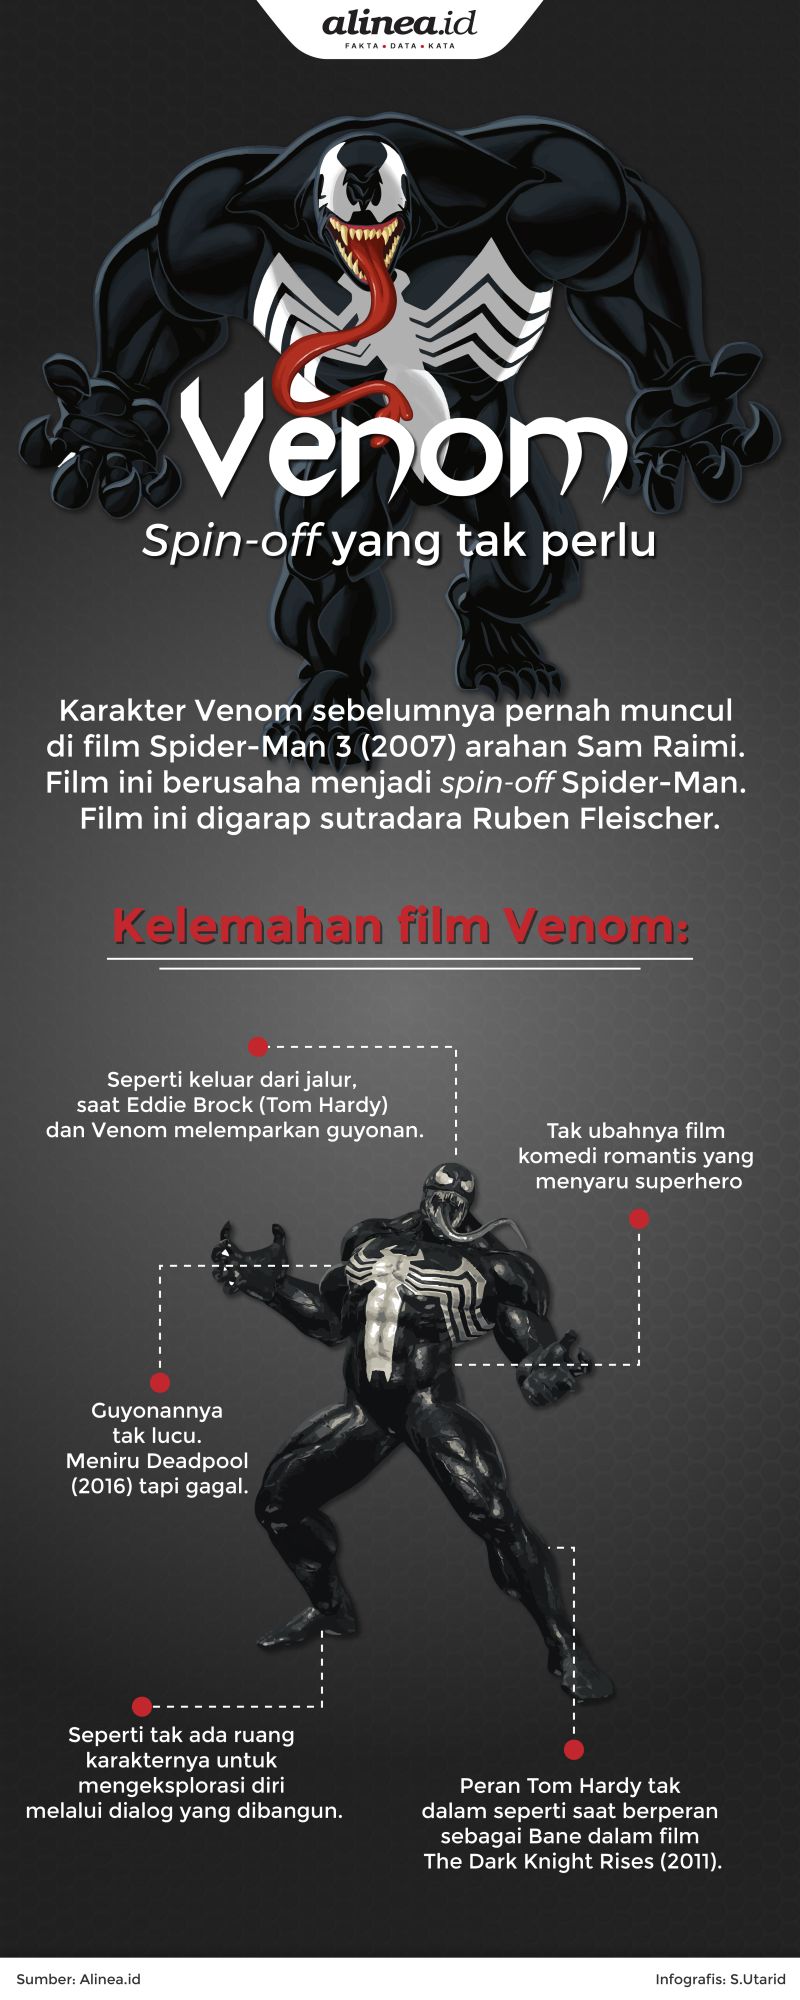 Serba-serbi film Venom